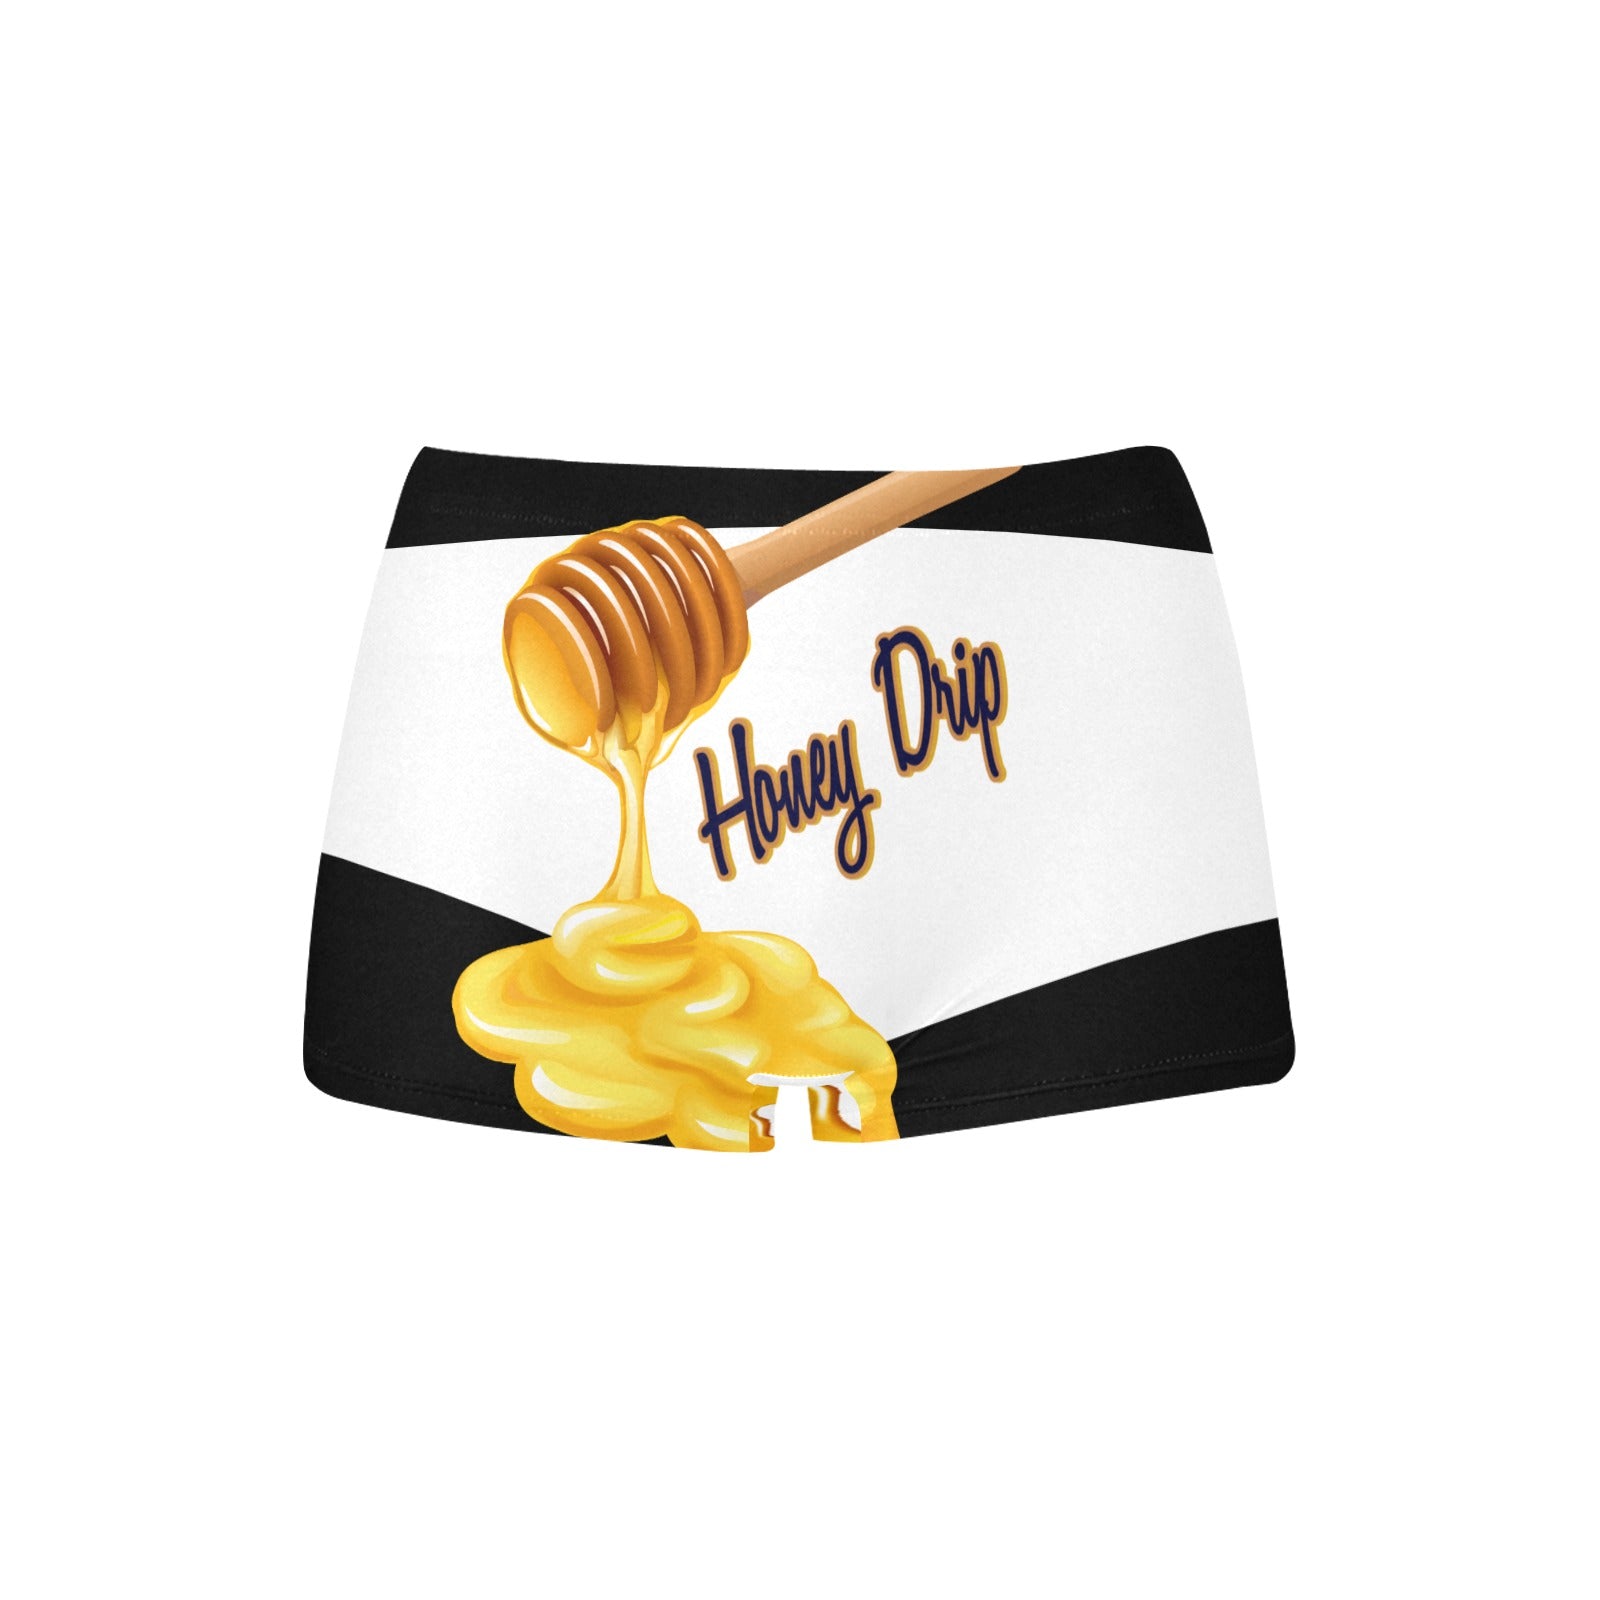 Xcarii Xii - Women's Honey Dripping Boy short Panties.